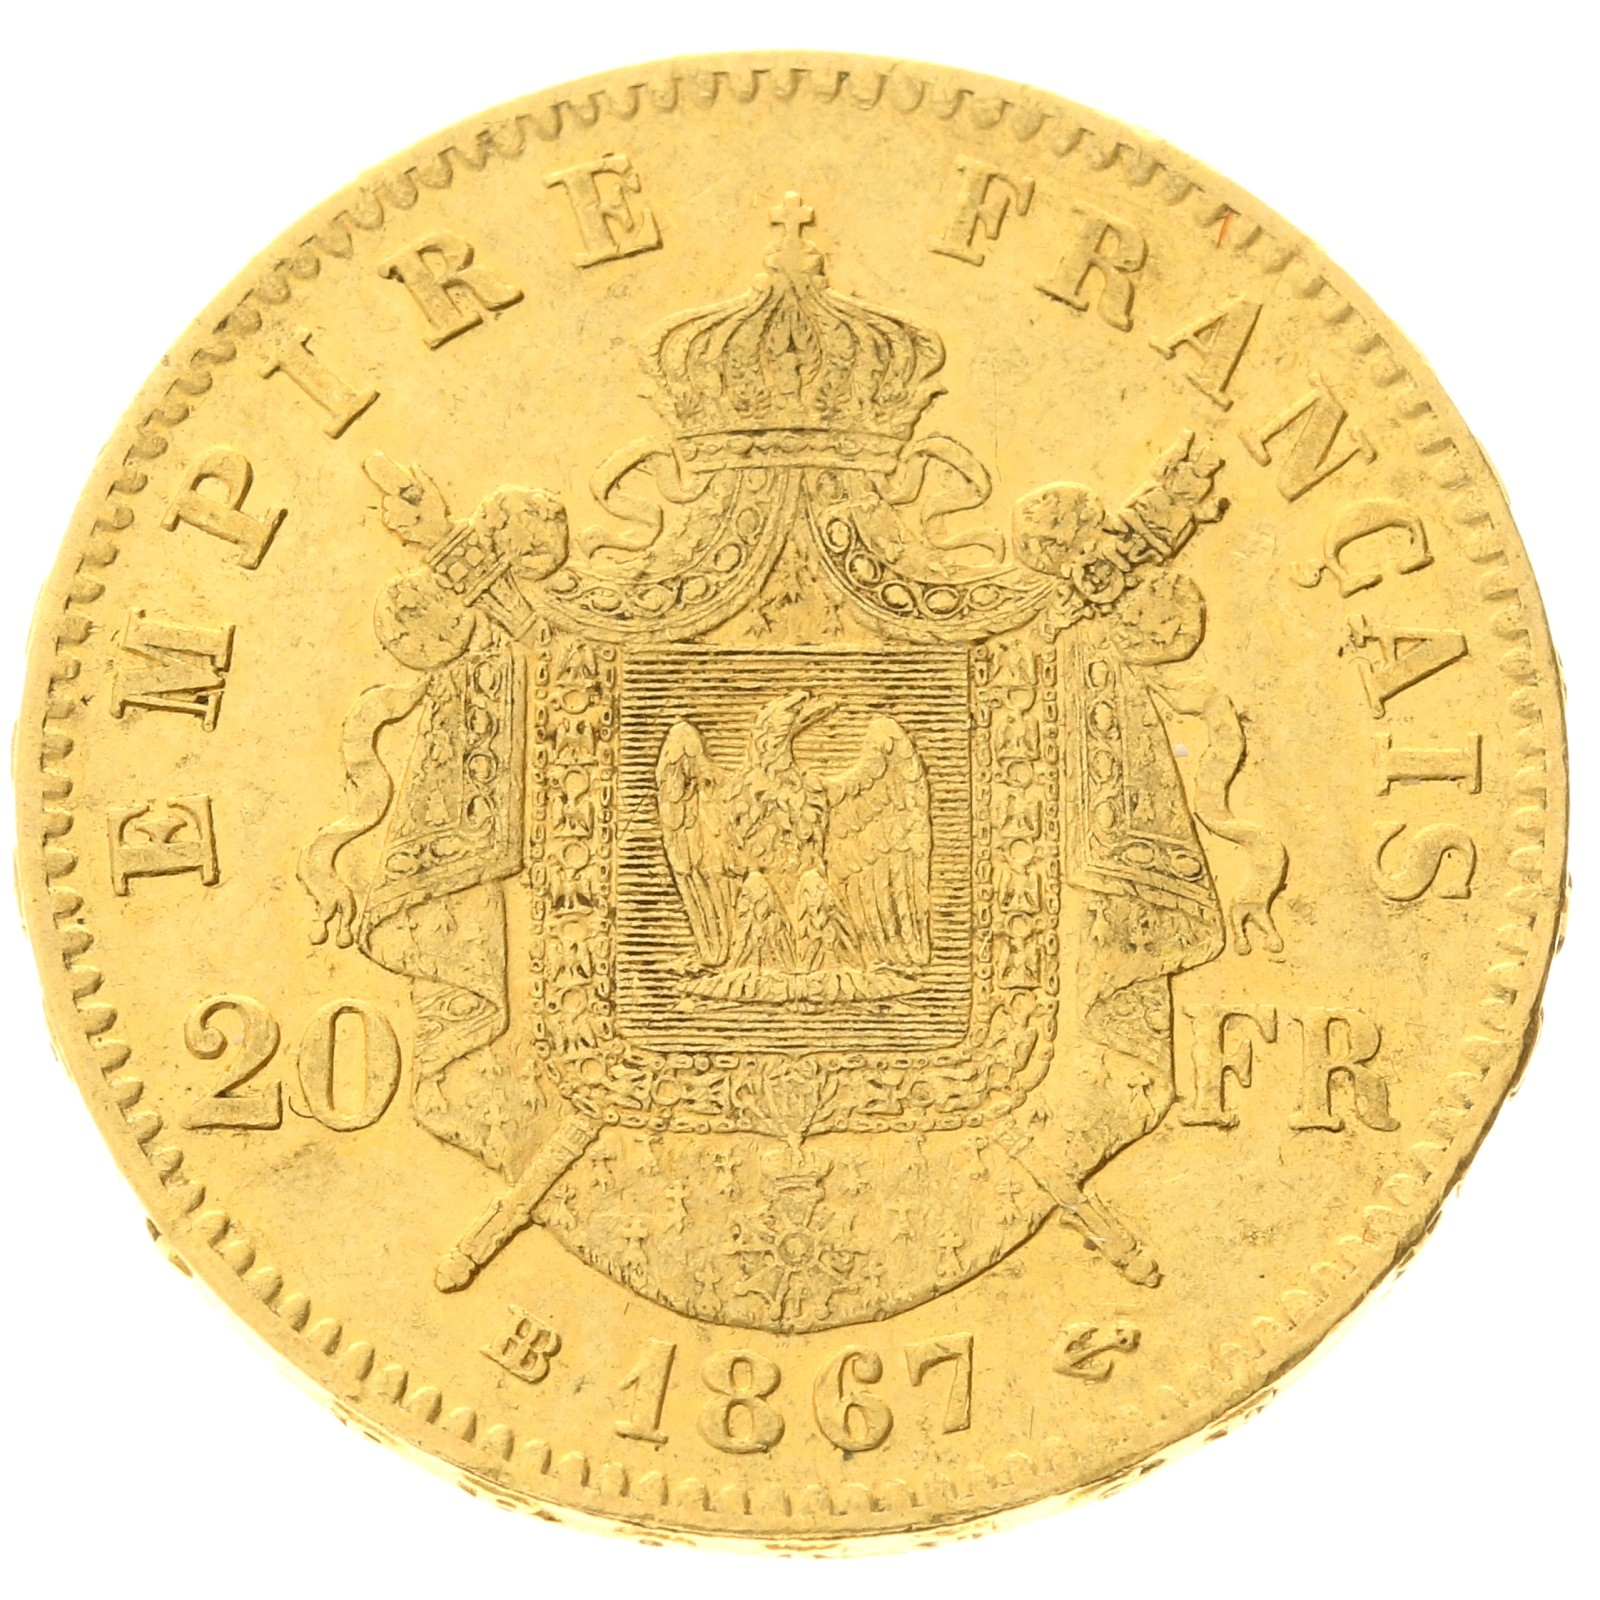 France - 20 francs - 1867 - BB - Napoleon III